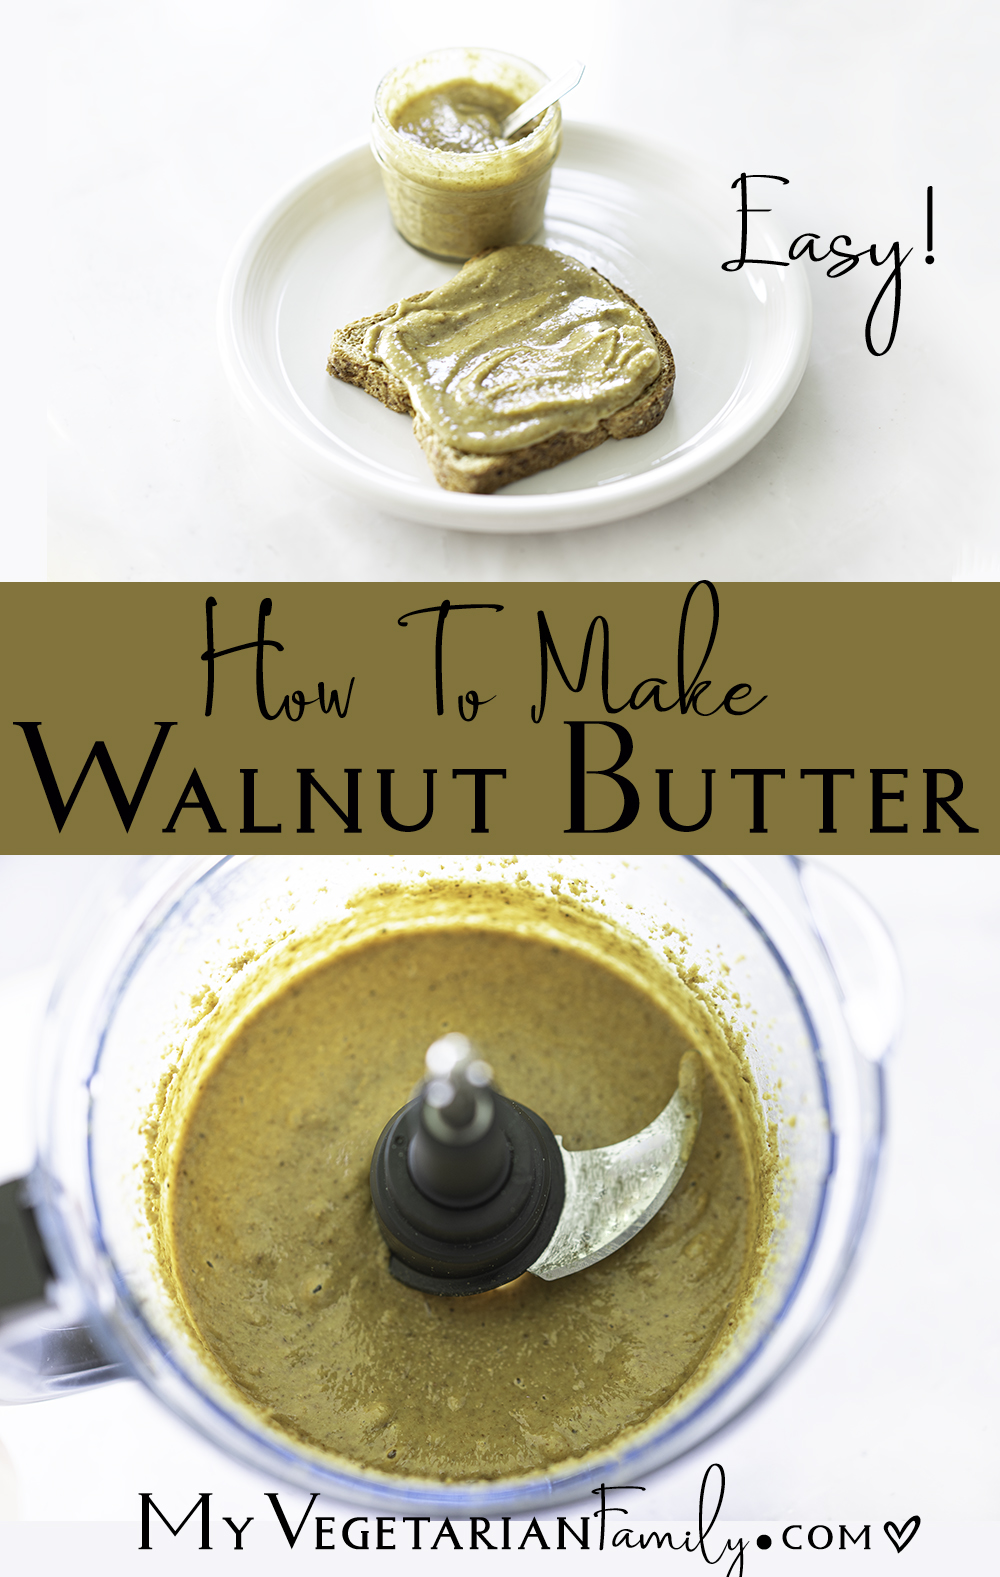 How To Make Walnut Butter | My Vegetarian Family #homemadewalnutbutter #walnutbutterrecipe #easynutbutterrecipe #noaddedoil #healthywalnutbutter